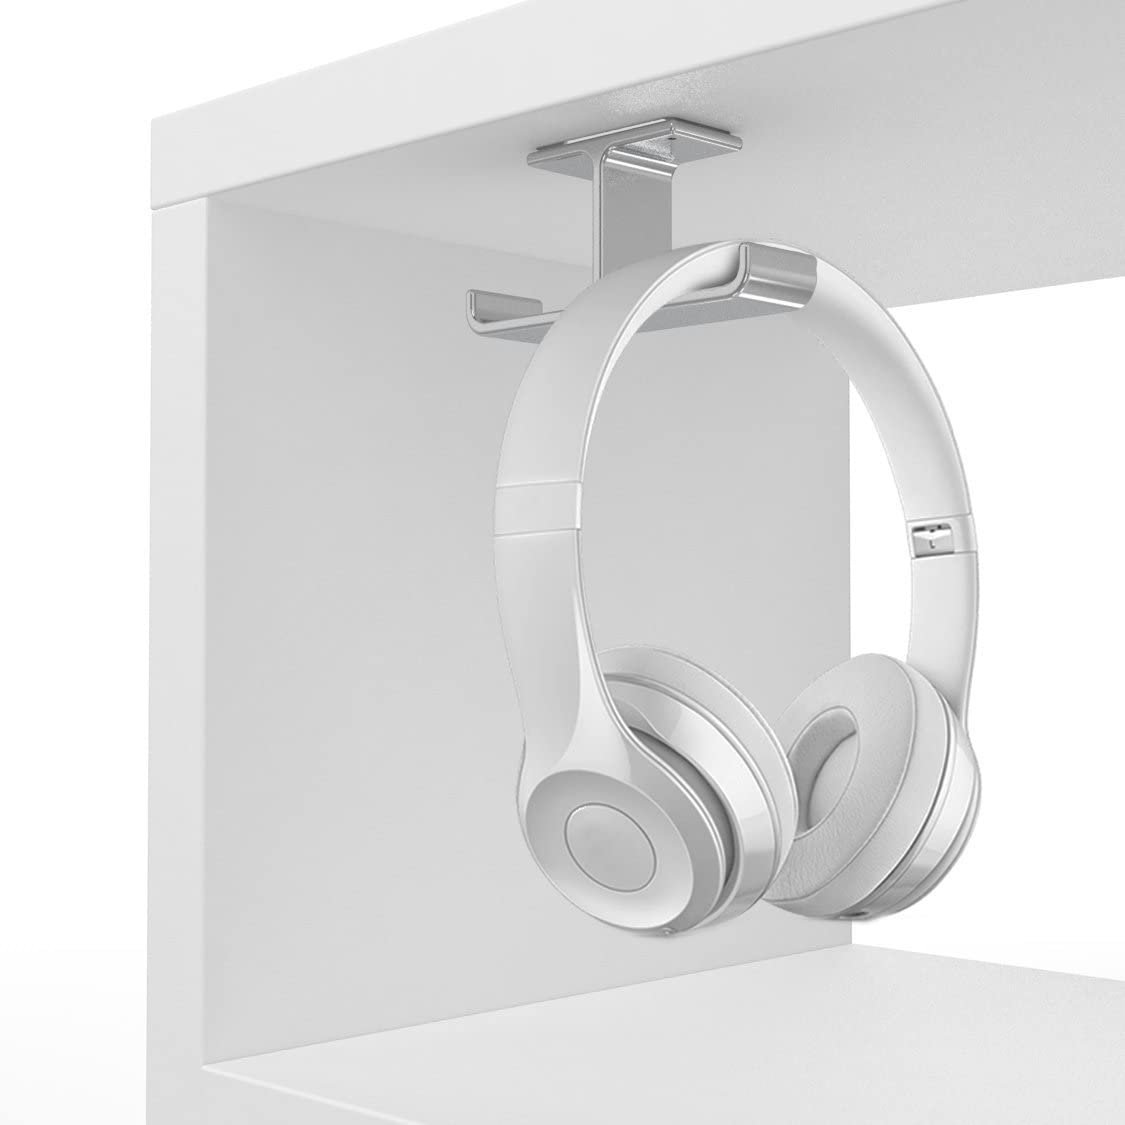 6amLifestyle Headset Headphone Stand Hanger Under Desk Designed